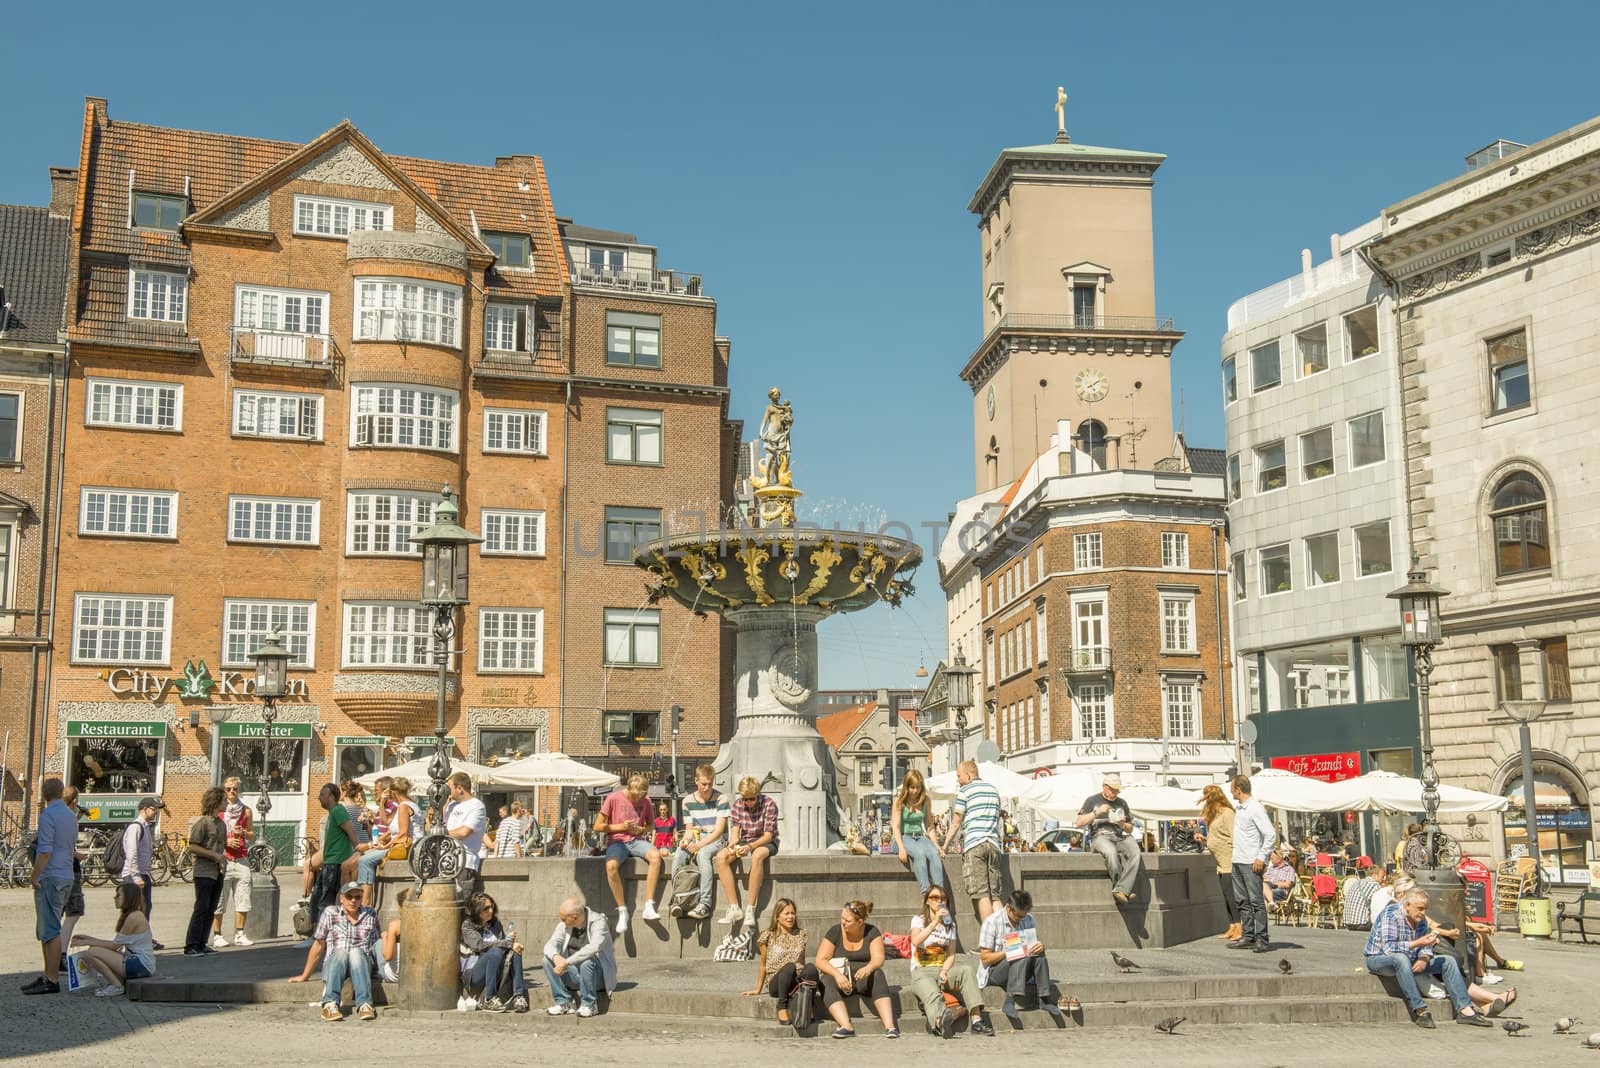 Tourists in Copenhagen. by Alenmax